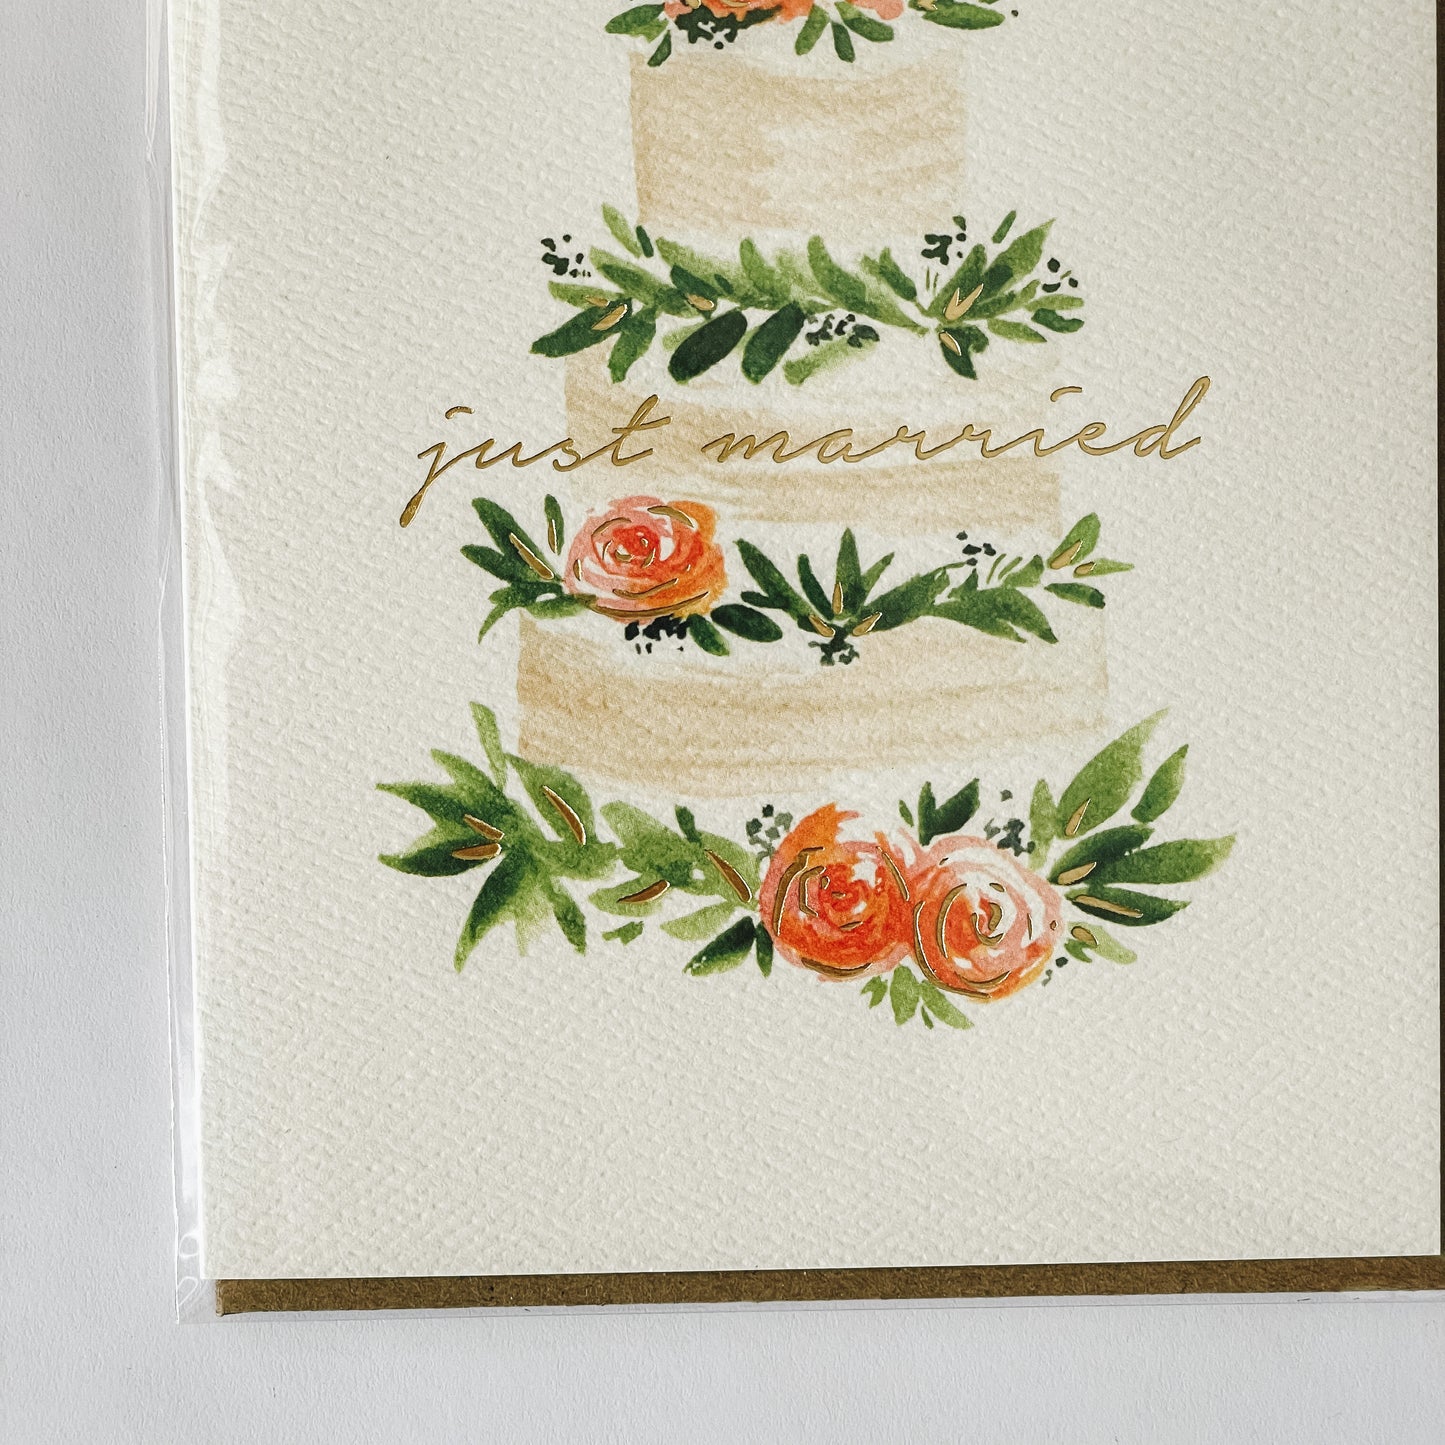 Handmade Watercolor Greeting Card | Just Married